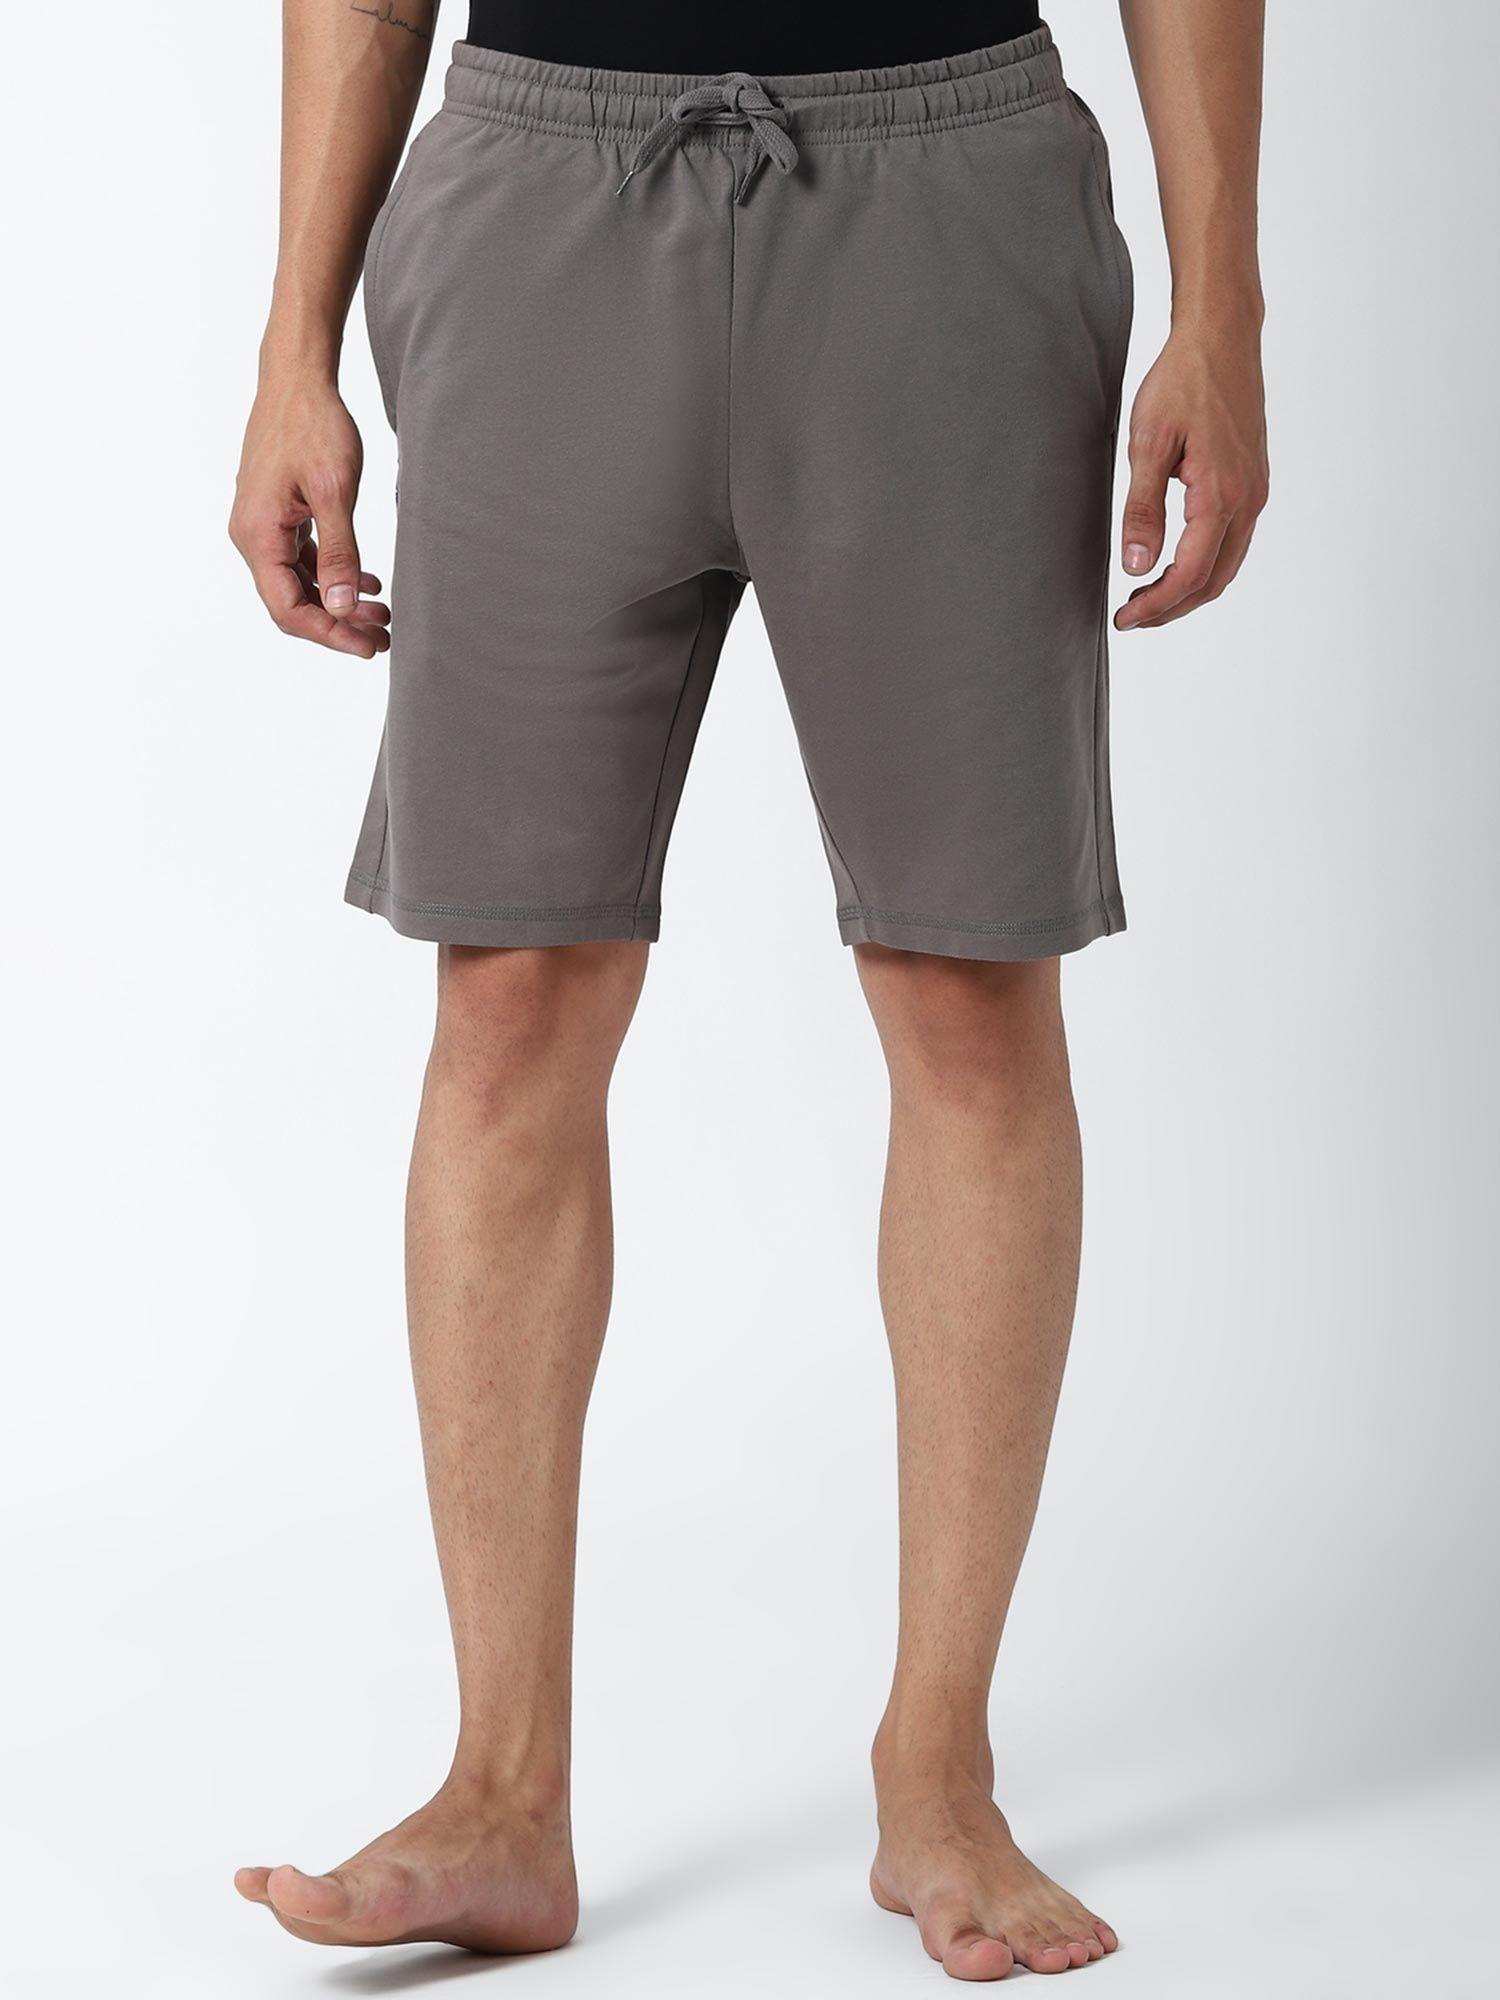 grey shorts